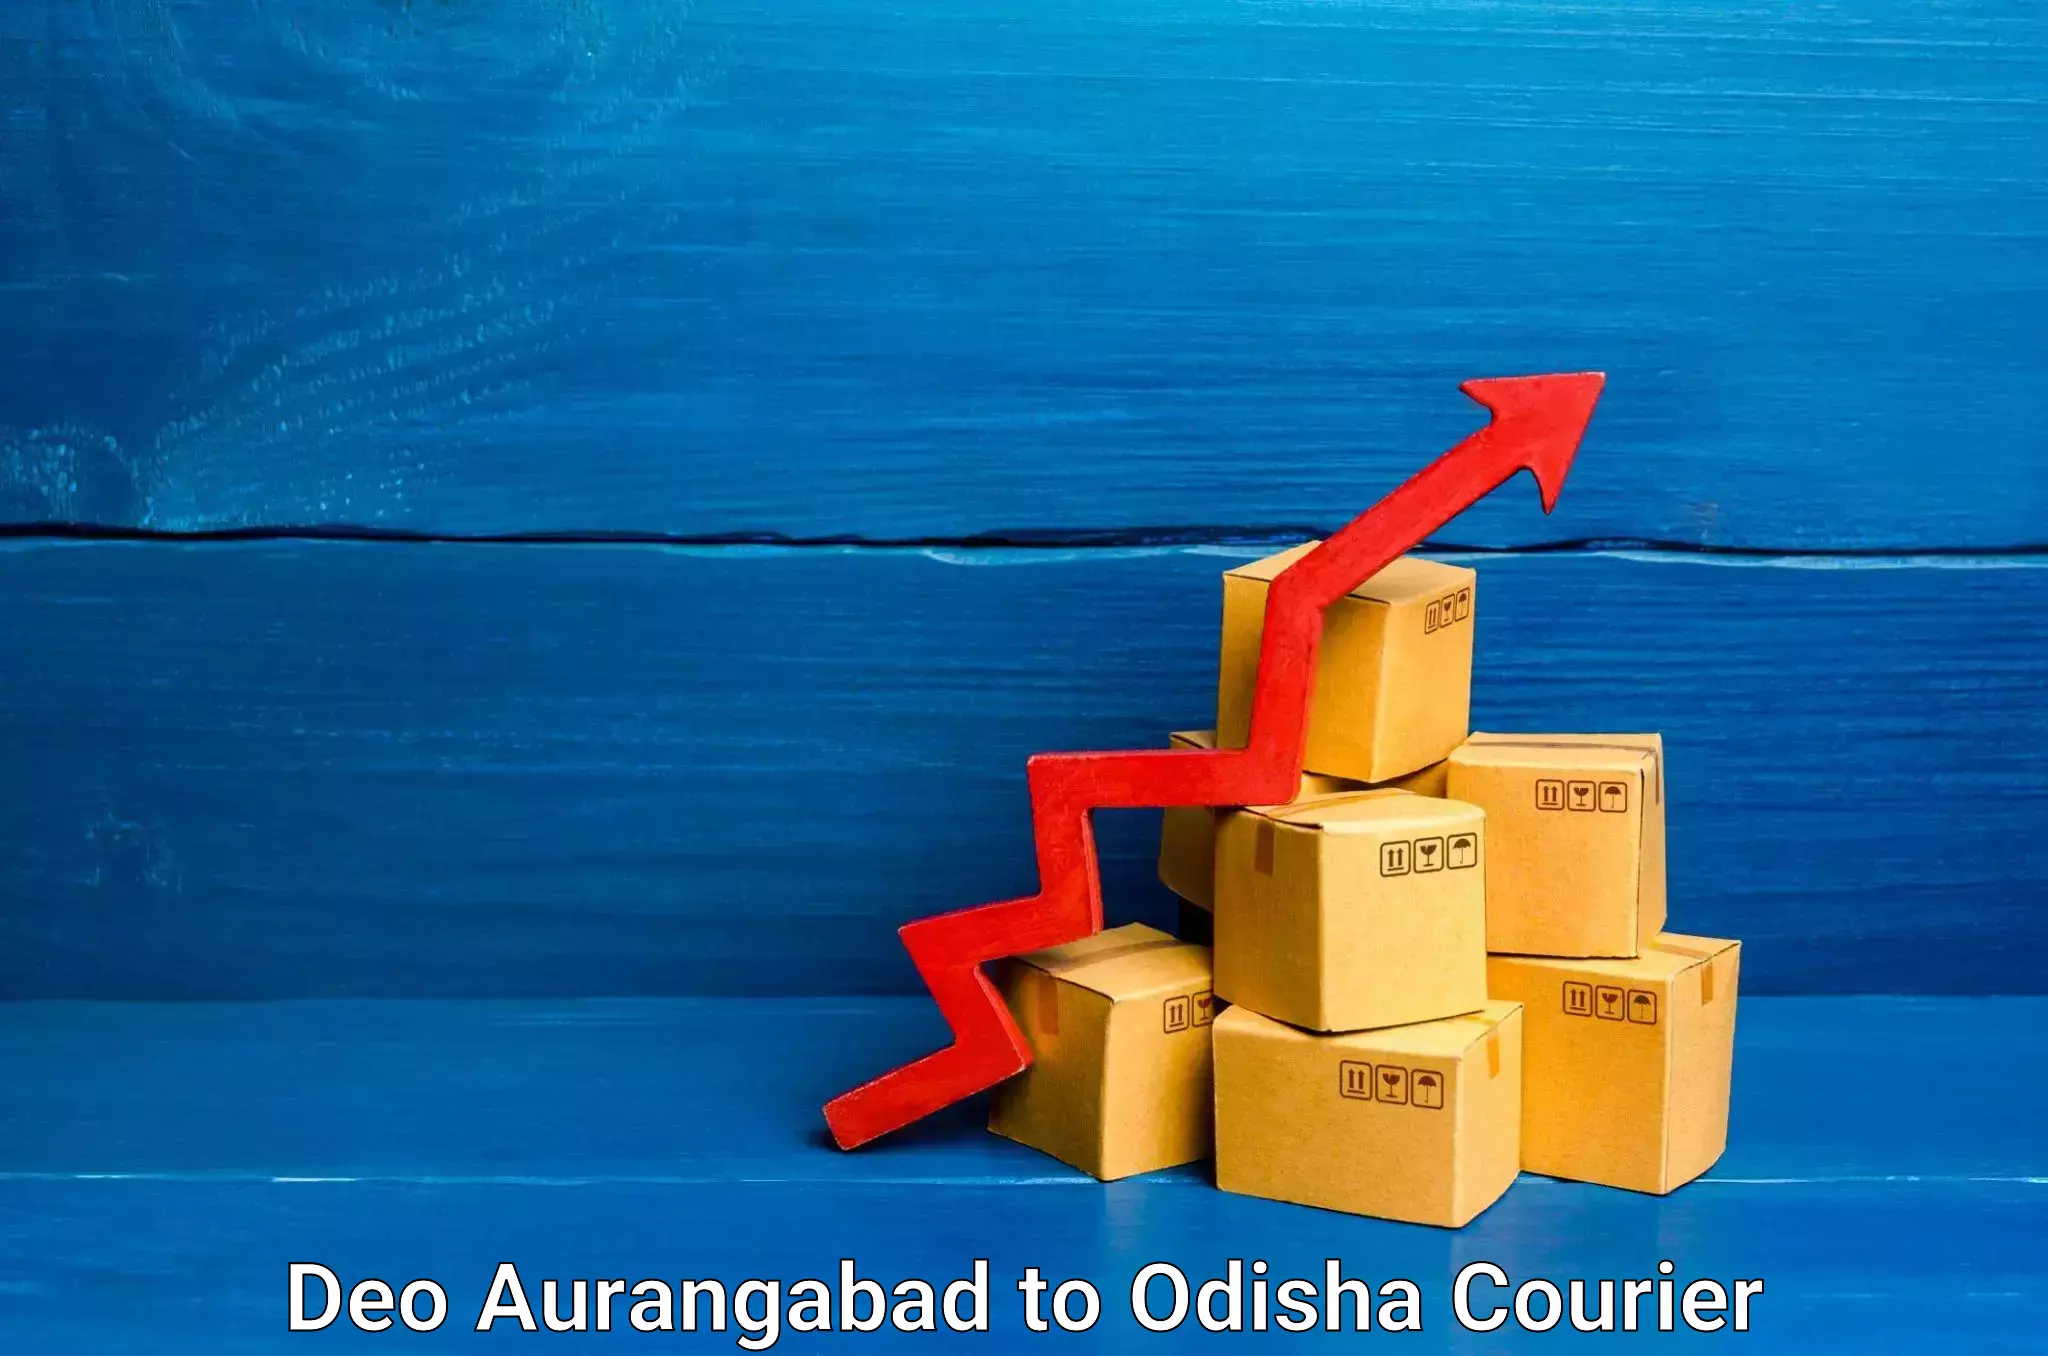 Home relocation experts Deo Aurangabad to Odisha